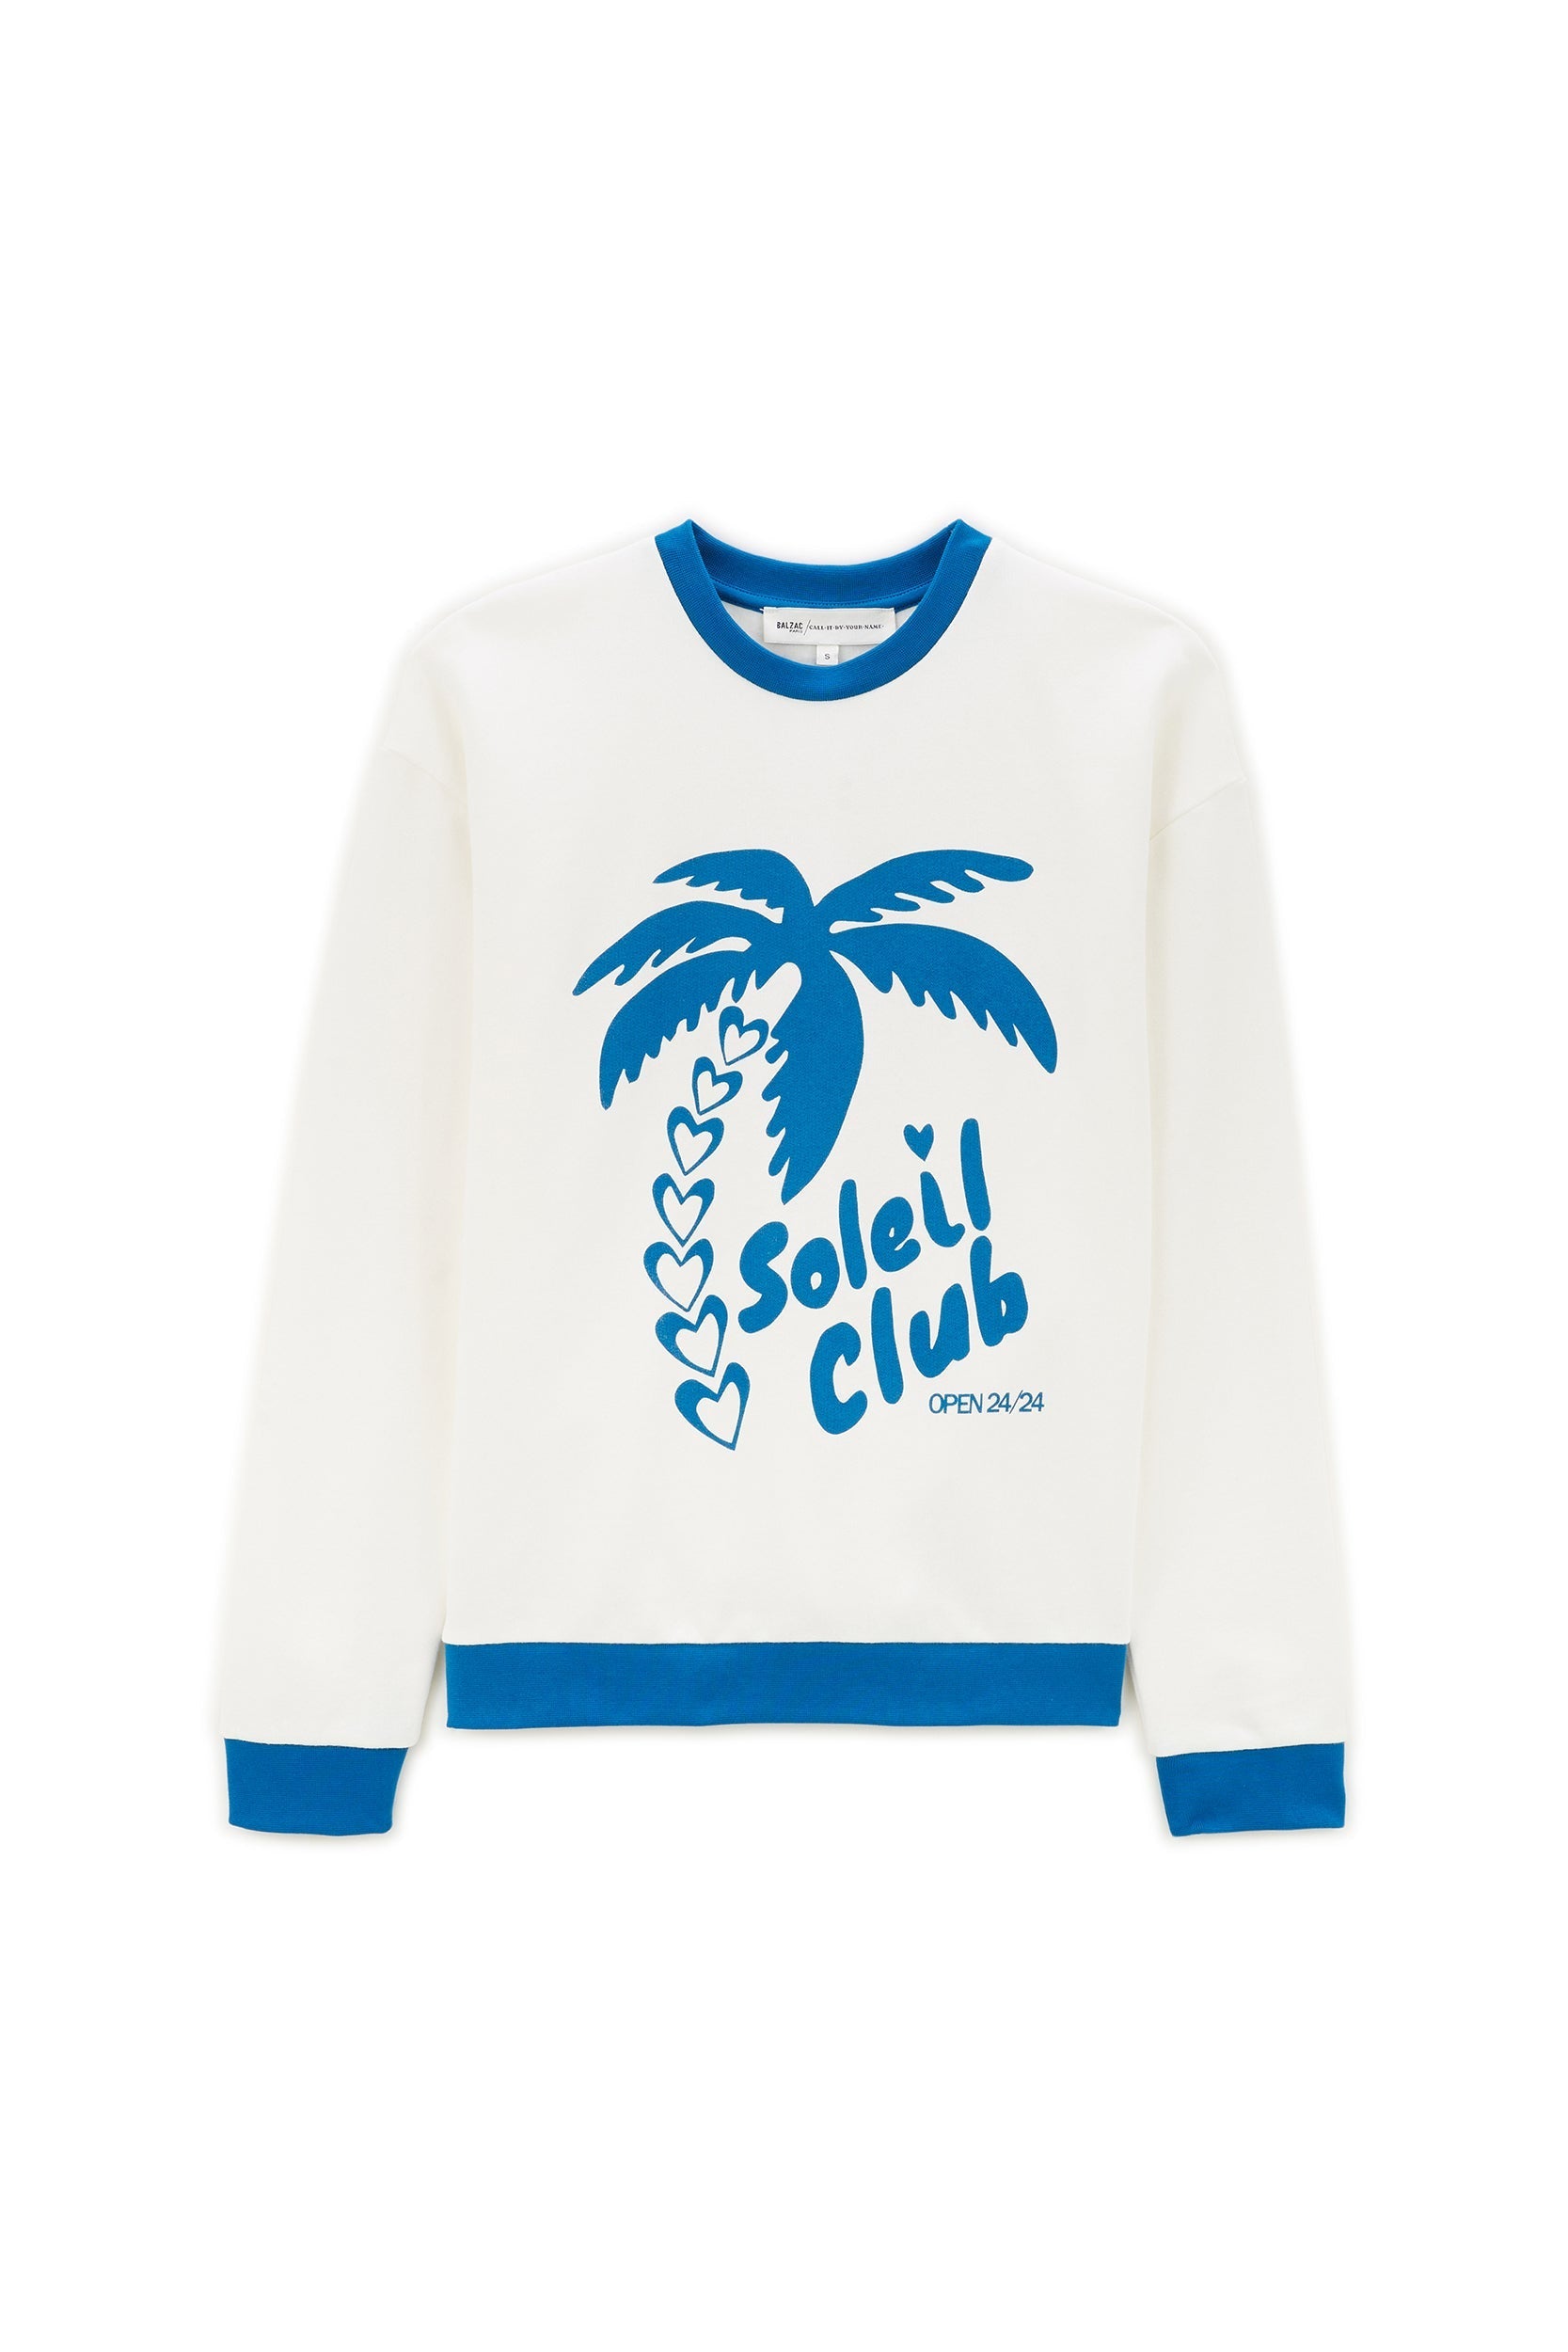 Sweat-shirt Harlow Soleil Club bleu et blanc